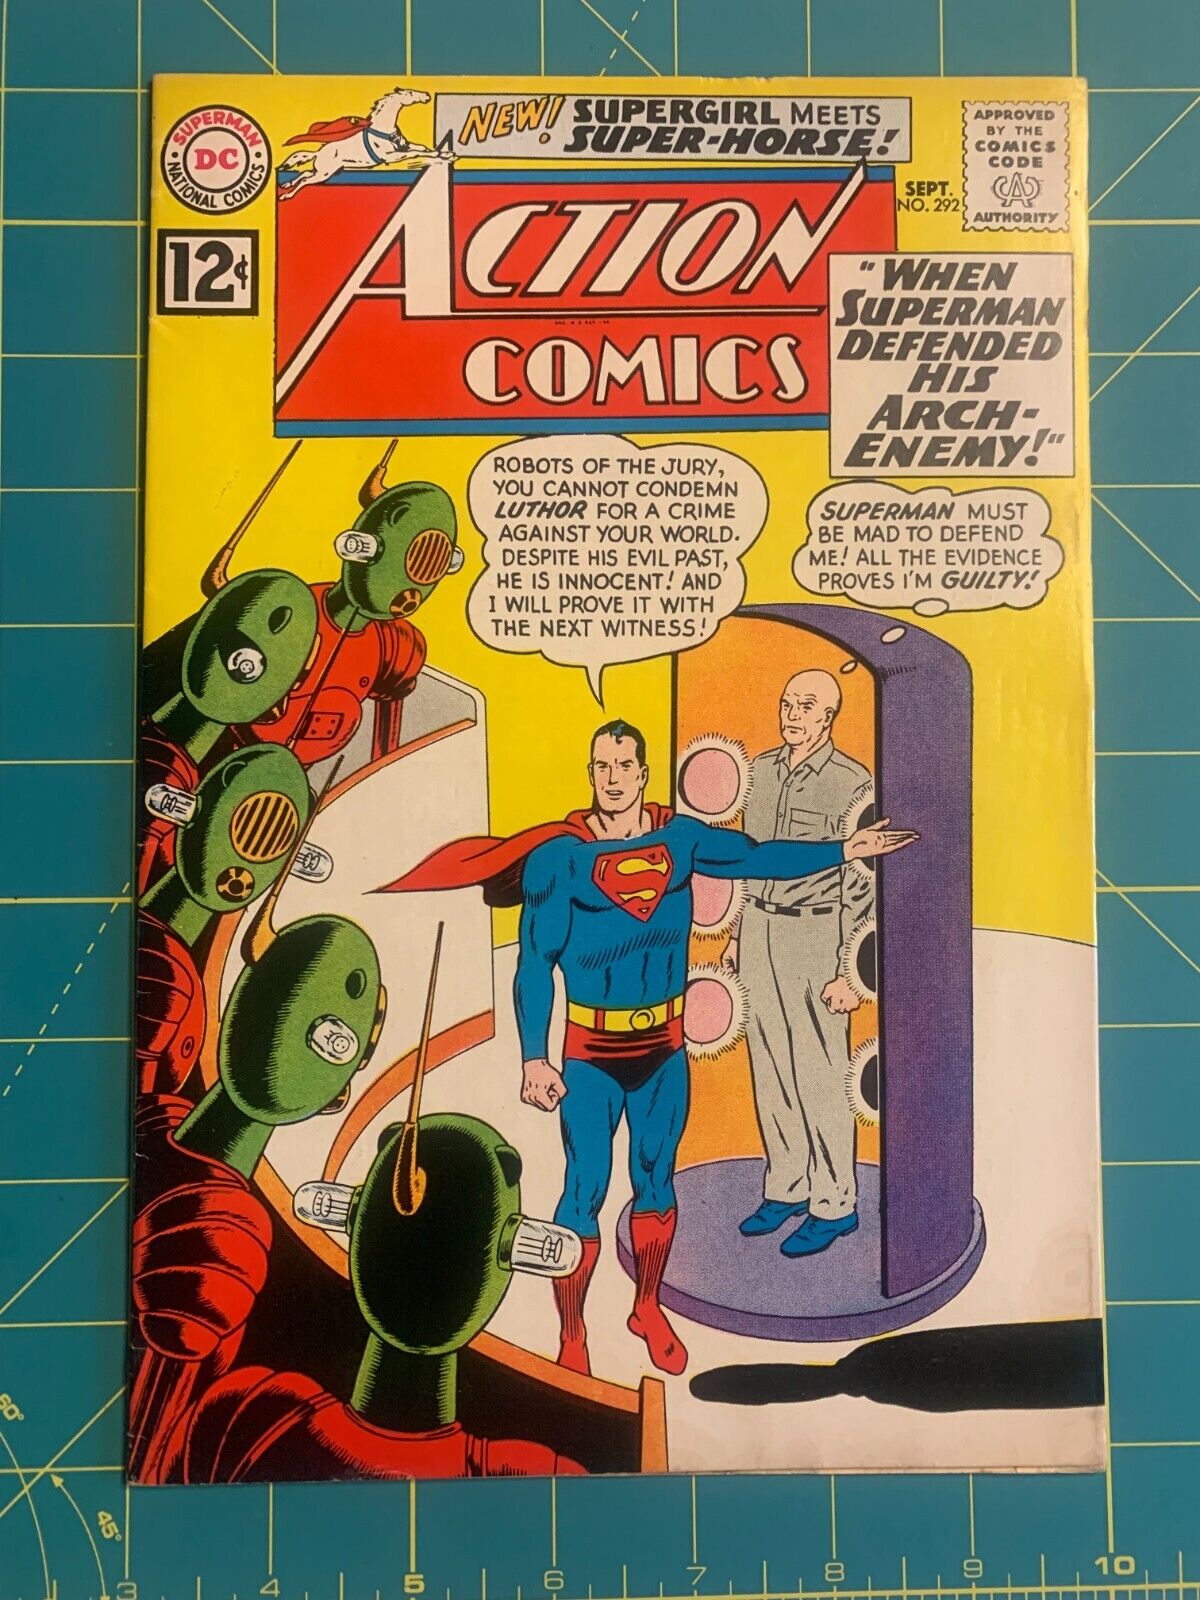 Action Comics #292 - Sep 1962 - Vol.1 - DC - Silver Age - 6.5 FN+